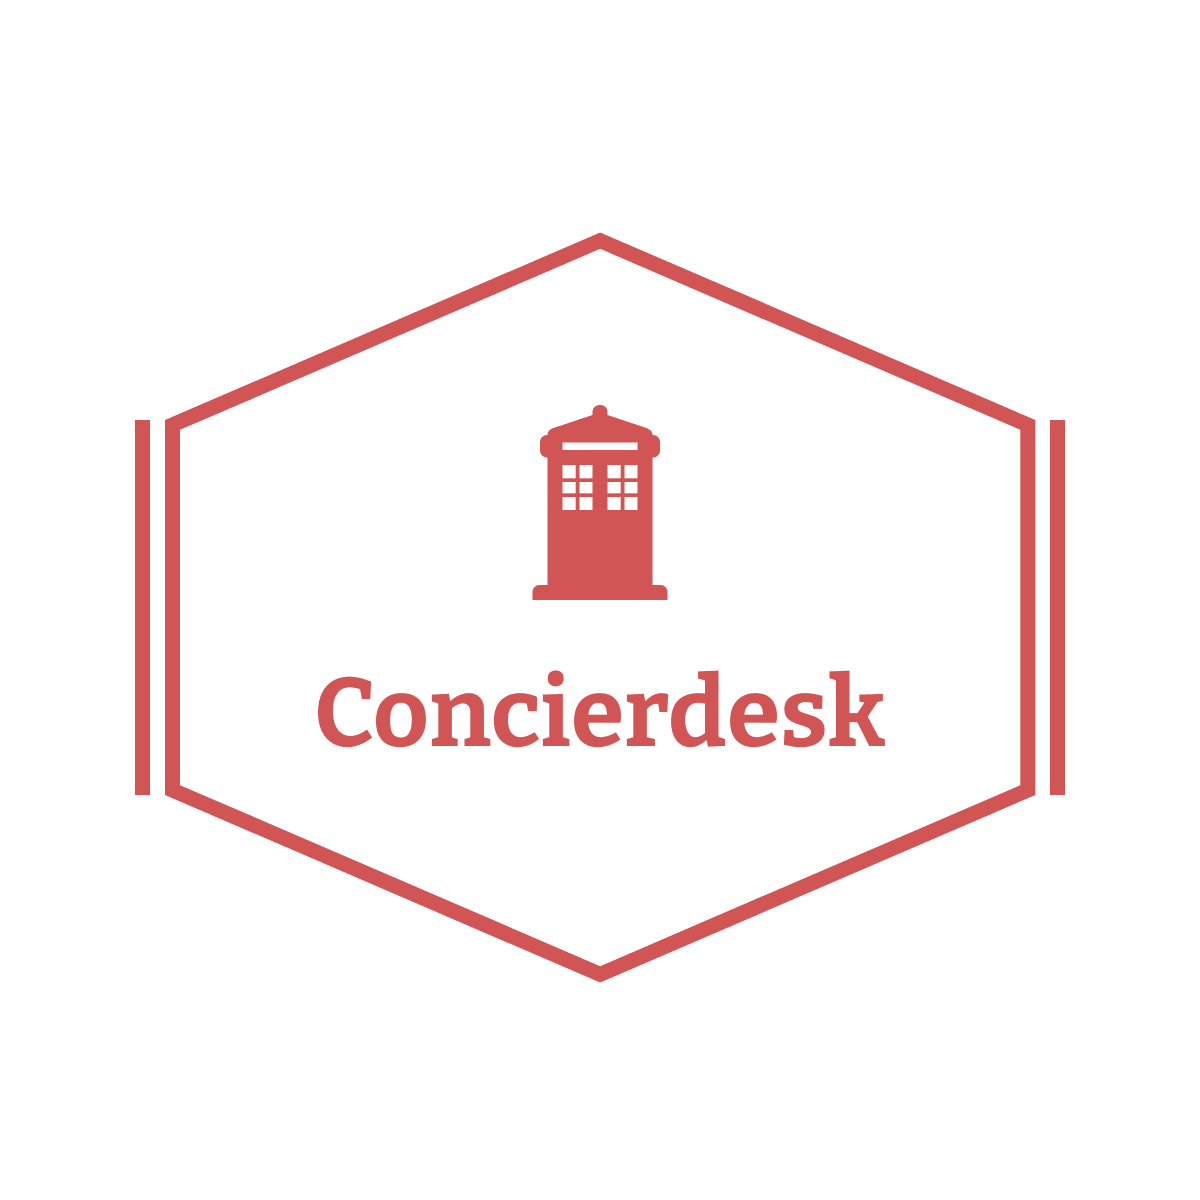 Concier Desk(コンシェルジュデスク)